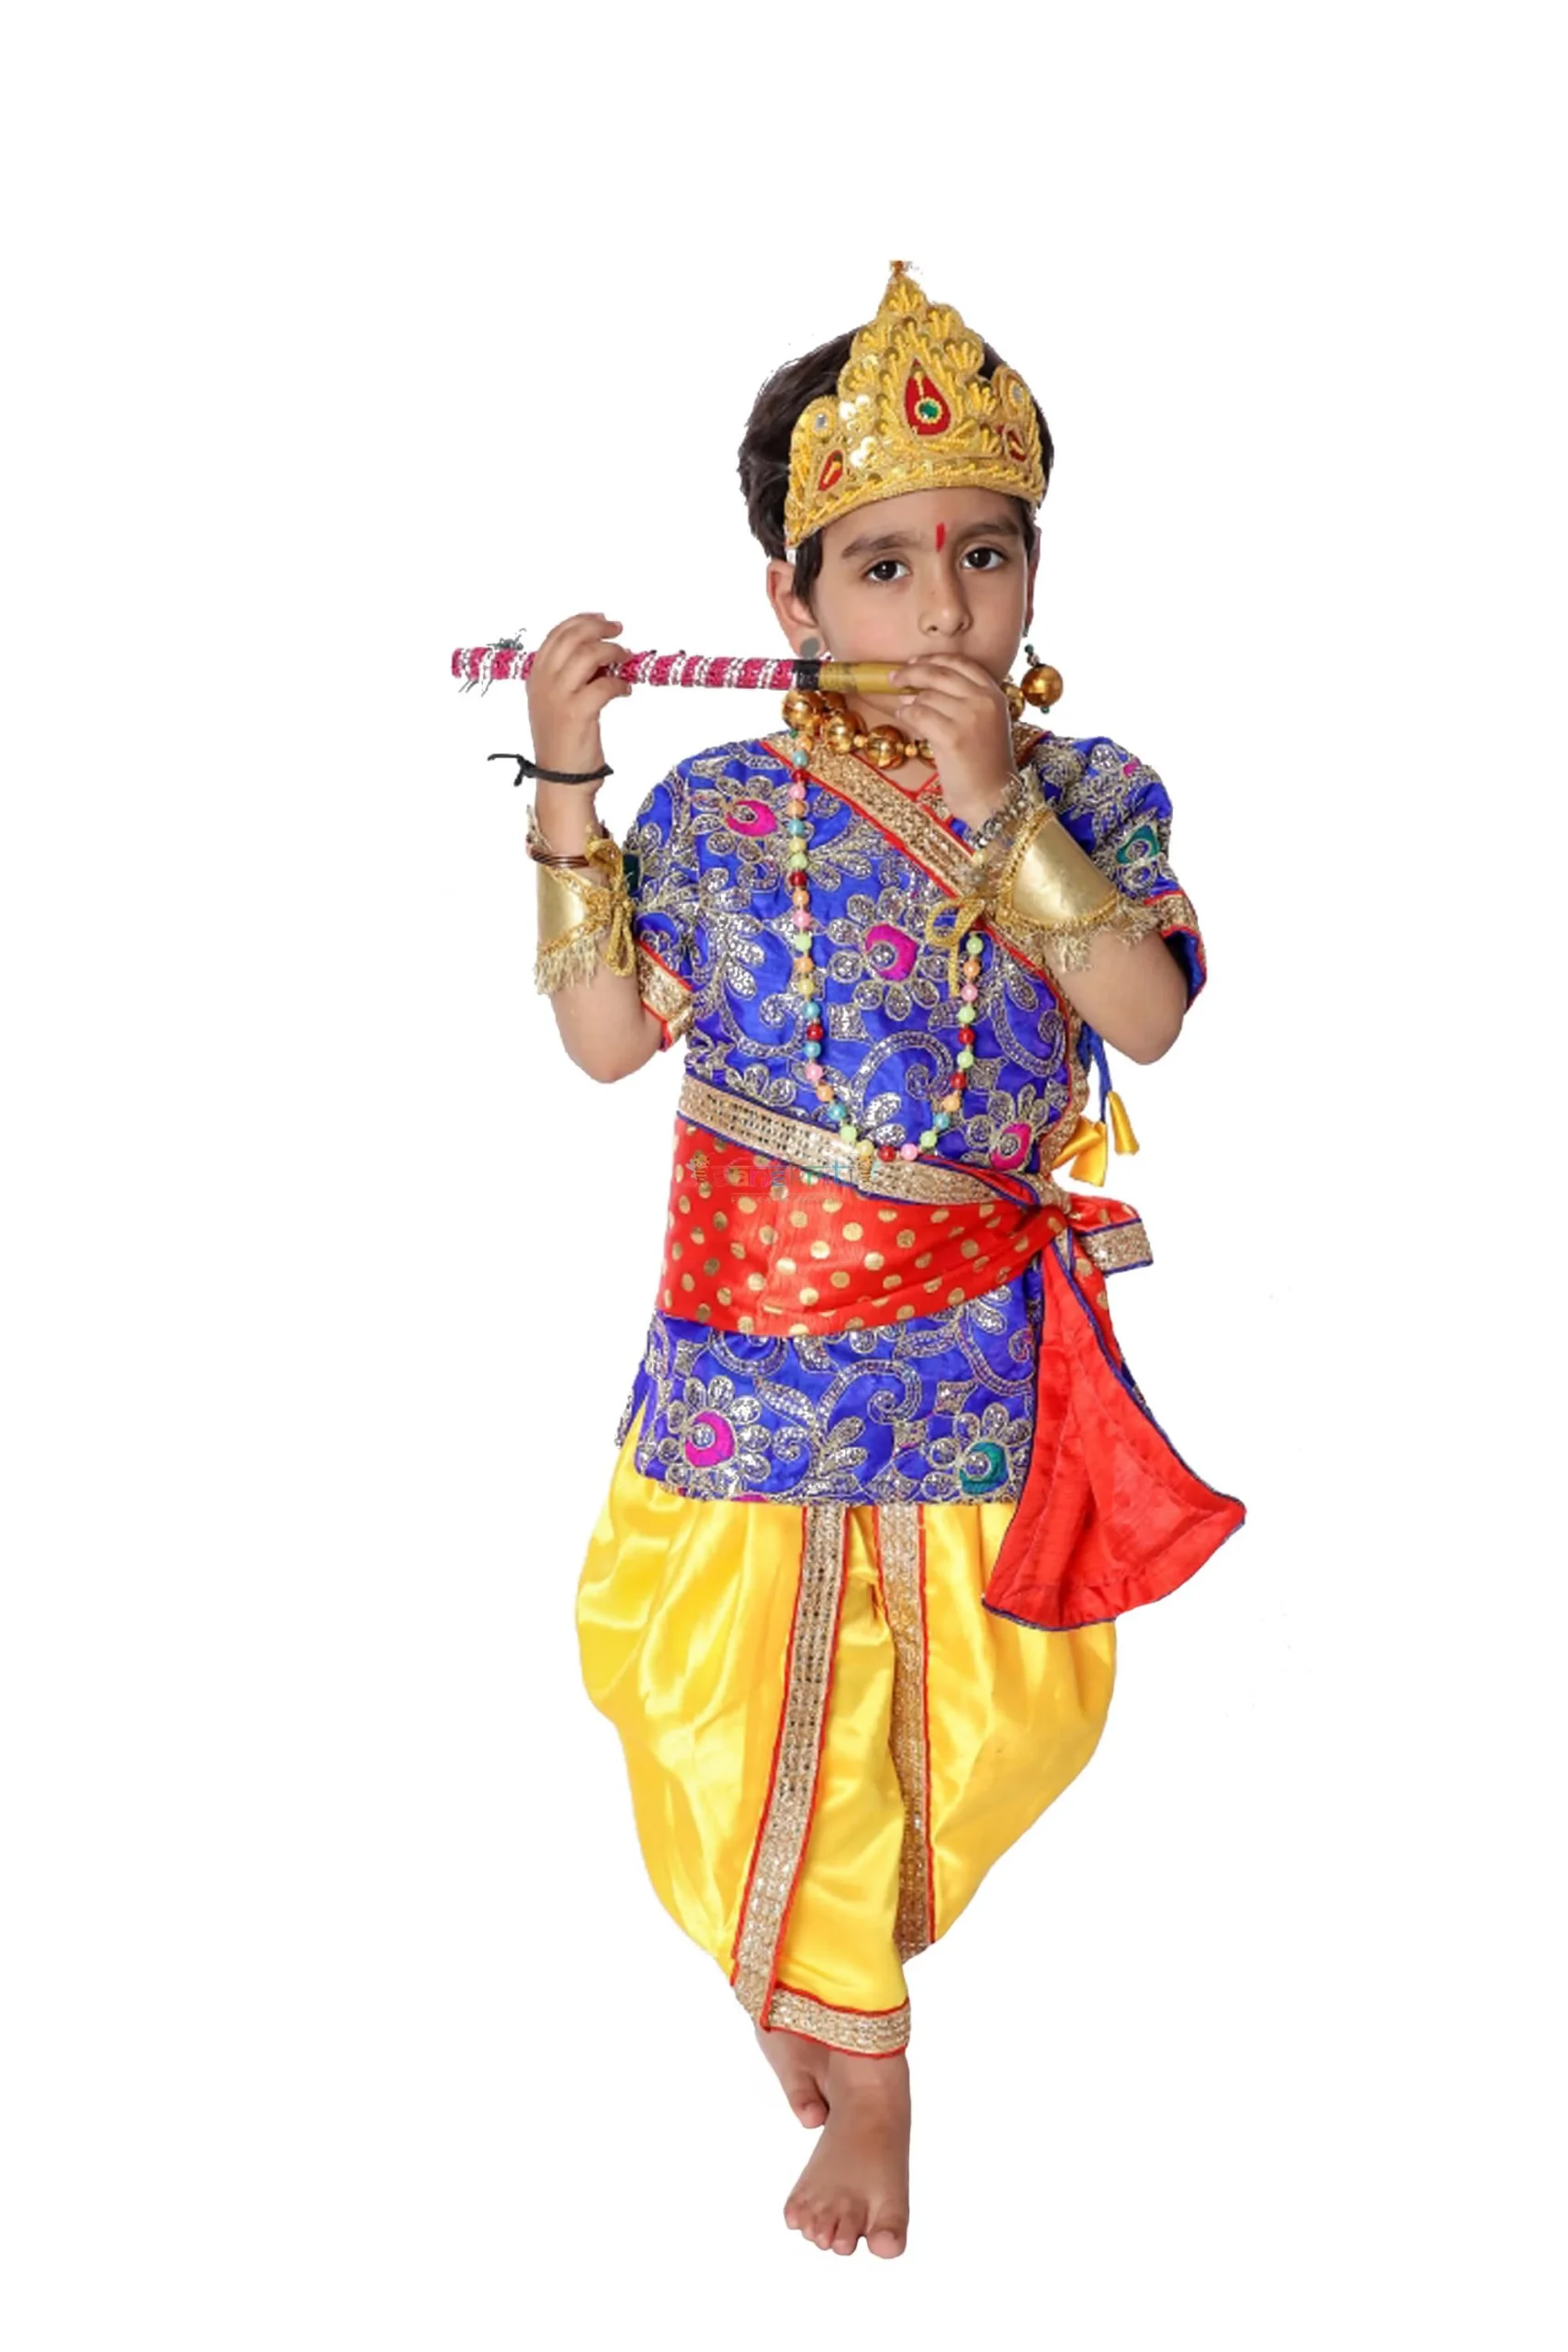 Fancy dress Krishna costume for Kids with Accessories Buy Online  KrishnaCostume